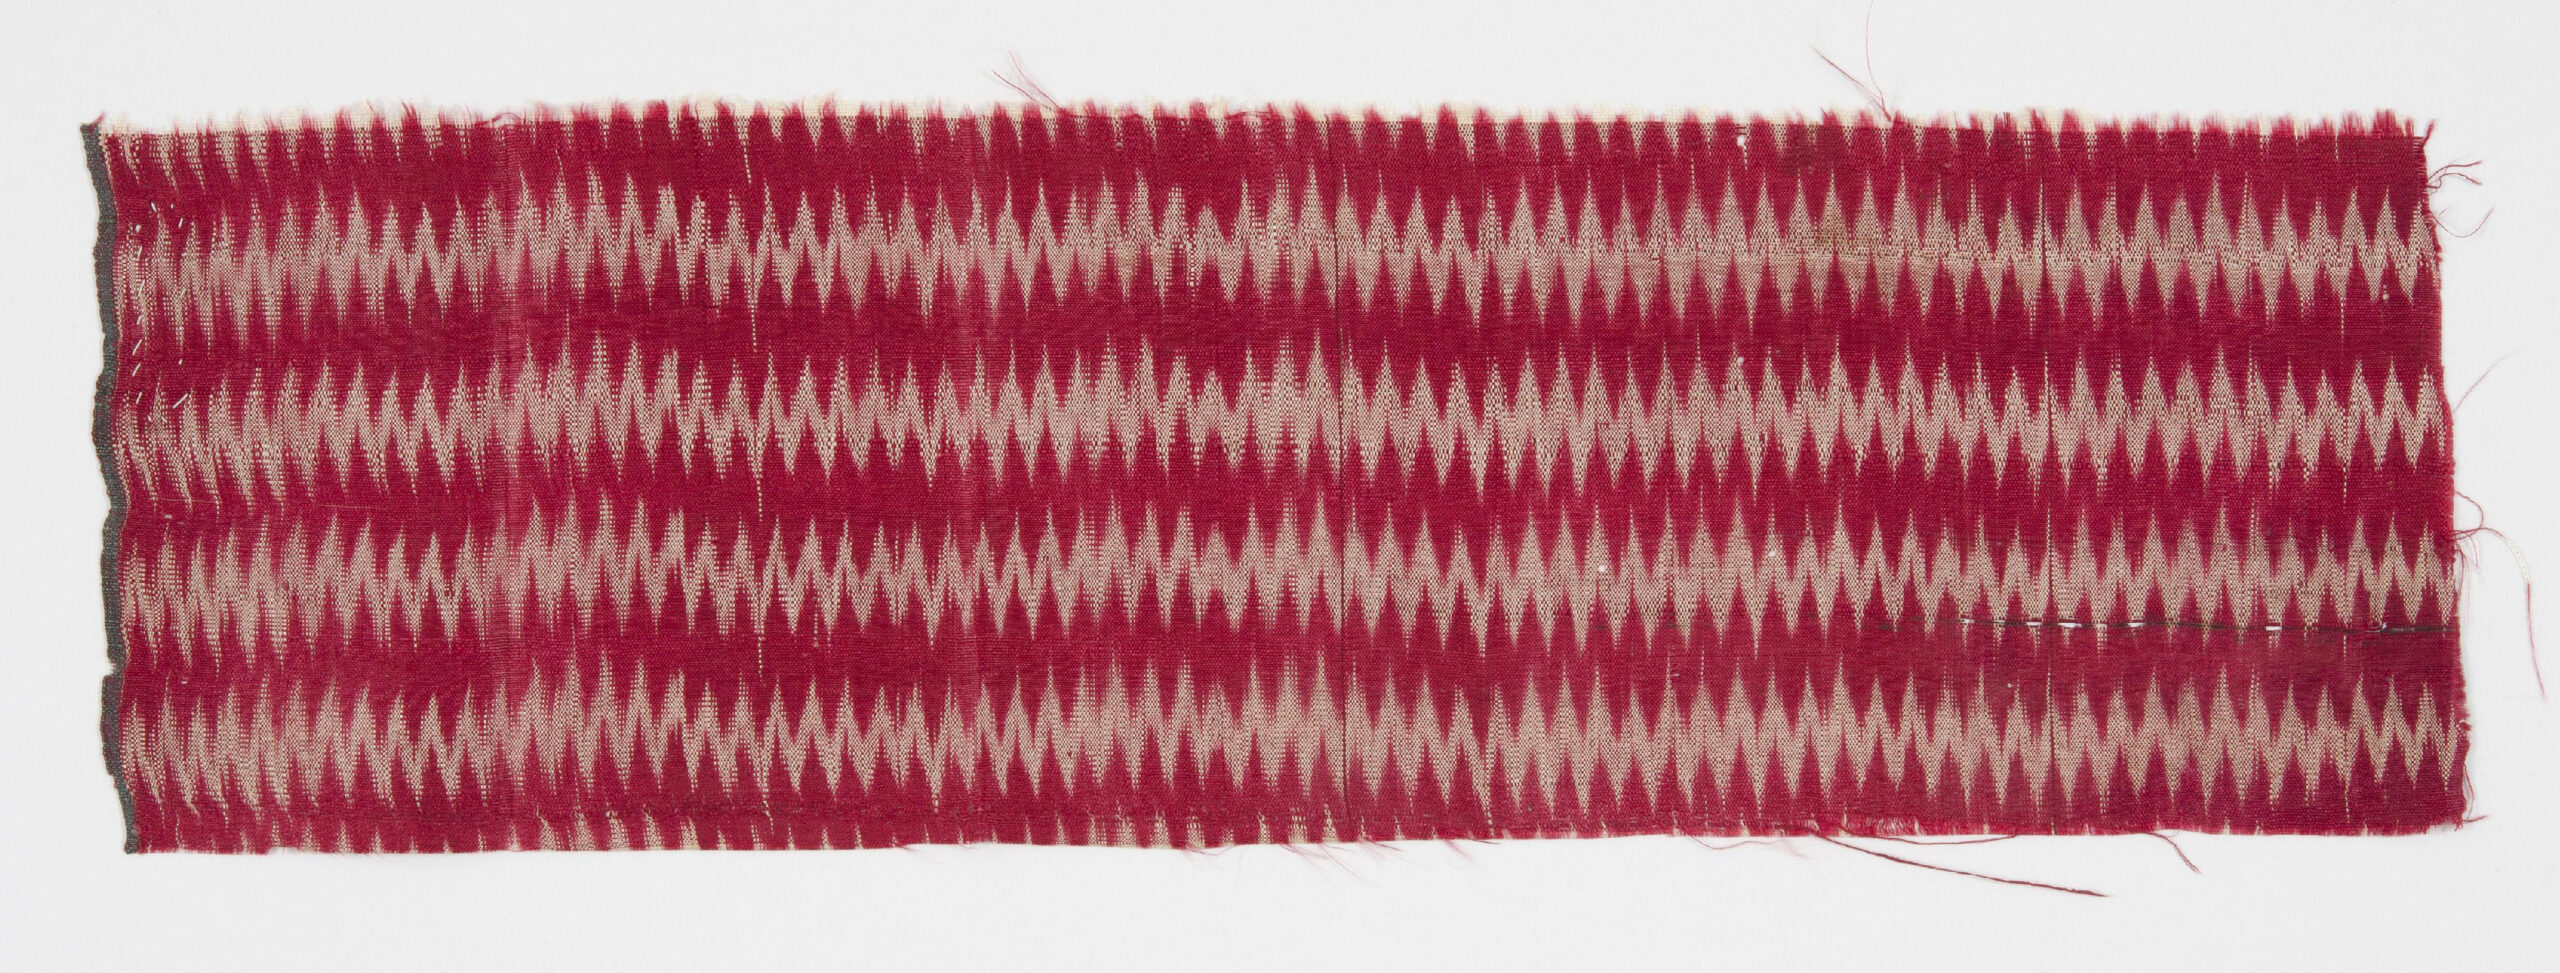 Silk cloth made in Varanasi, India - Bing Gallery